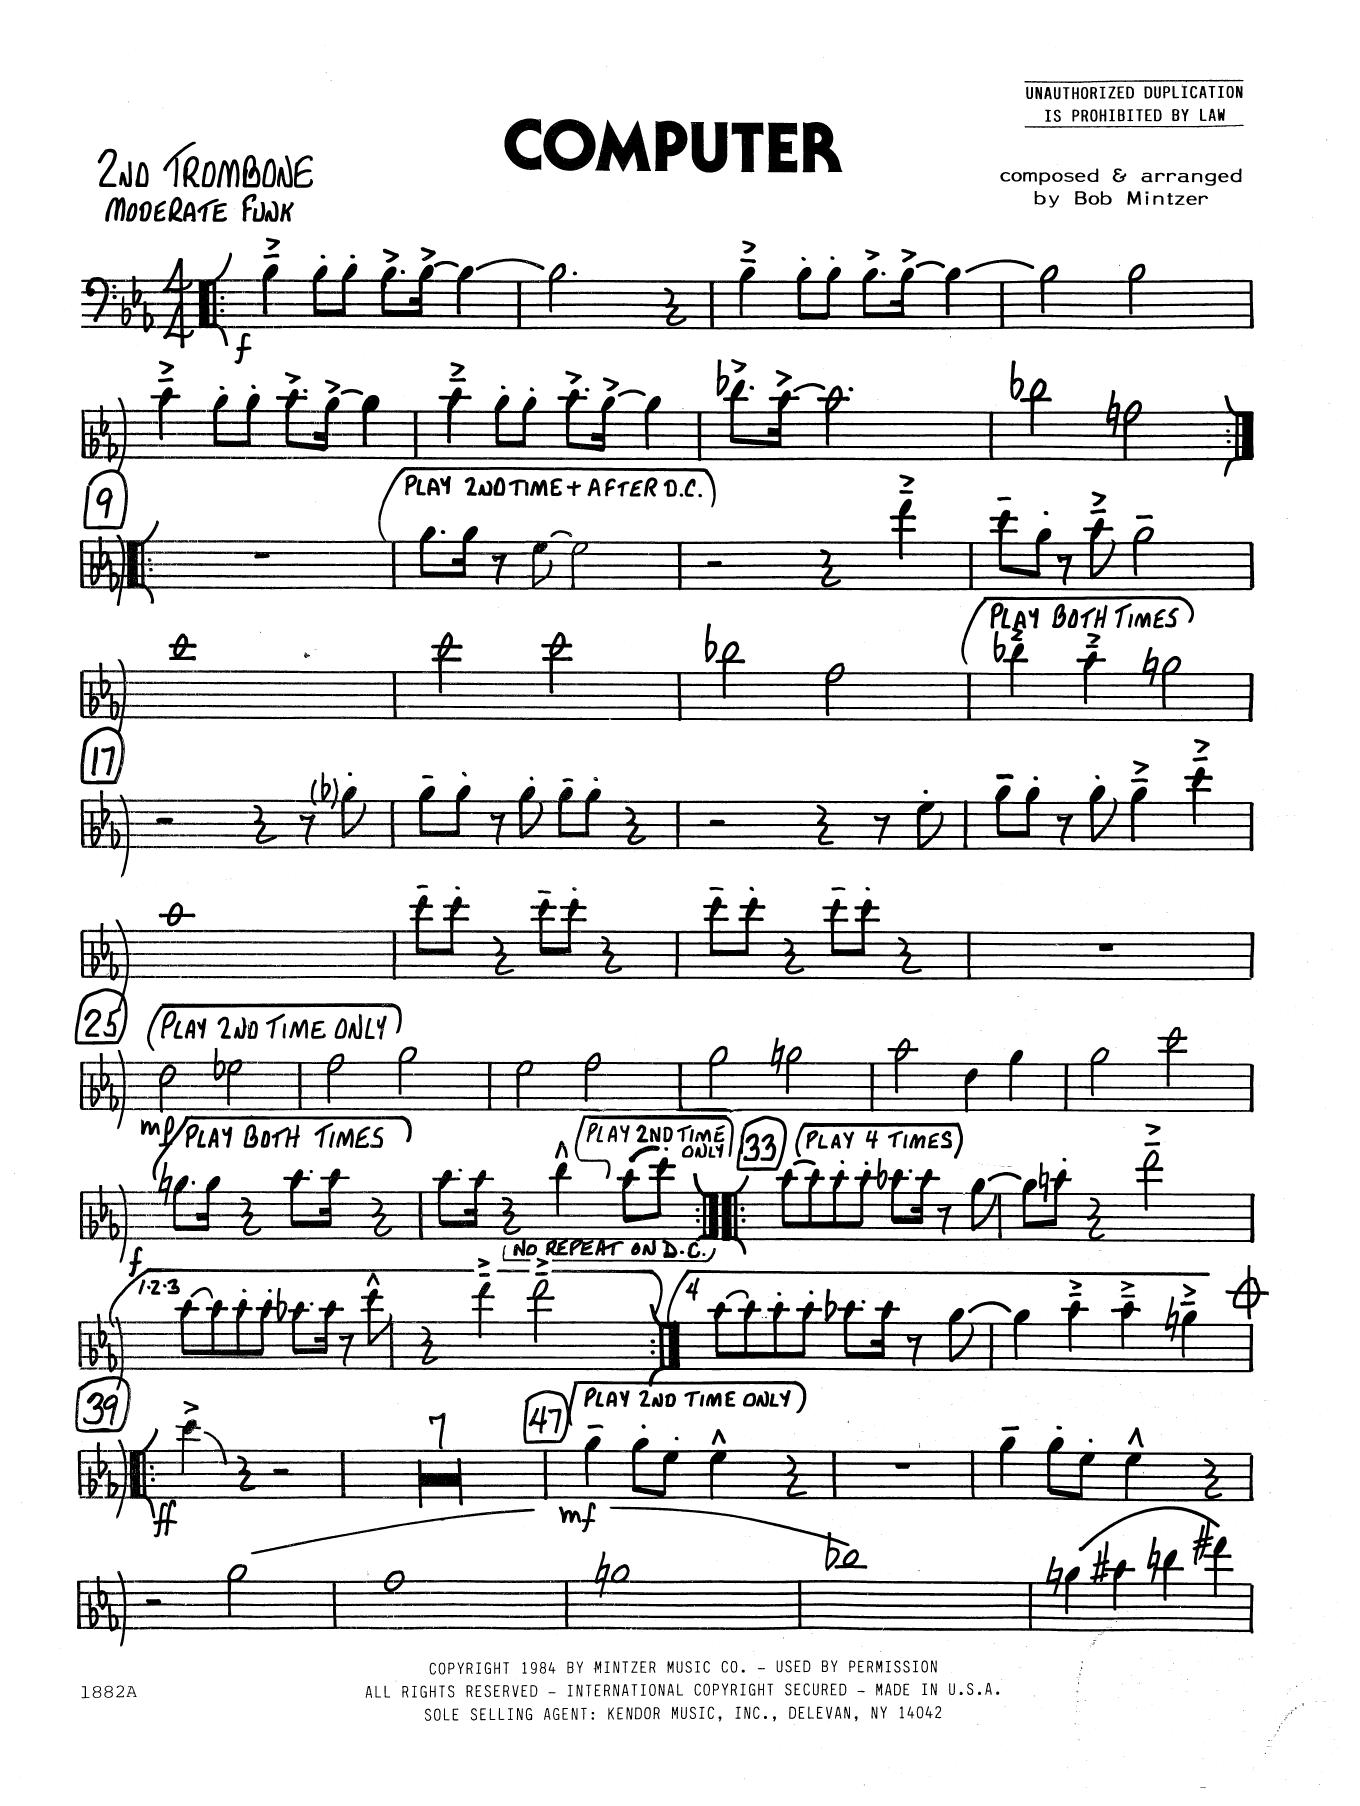 Download Bob Mintzer Computer - 2nd Trombone Sheet Music